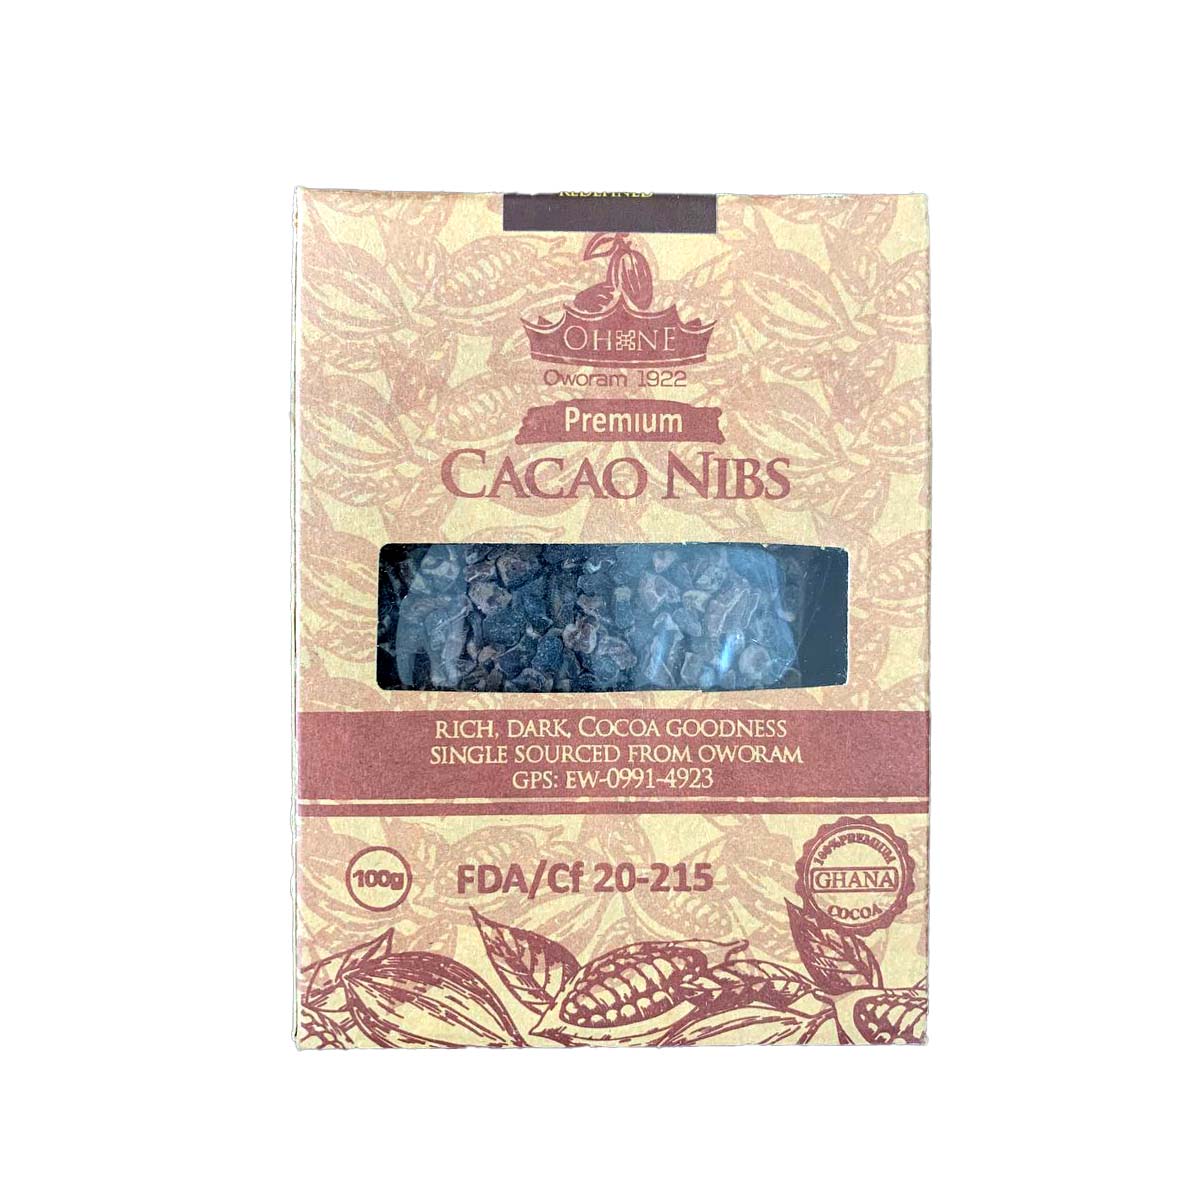 Premium Cacao Nibs 100g - pronatural